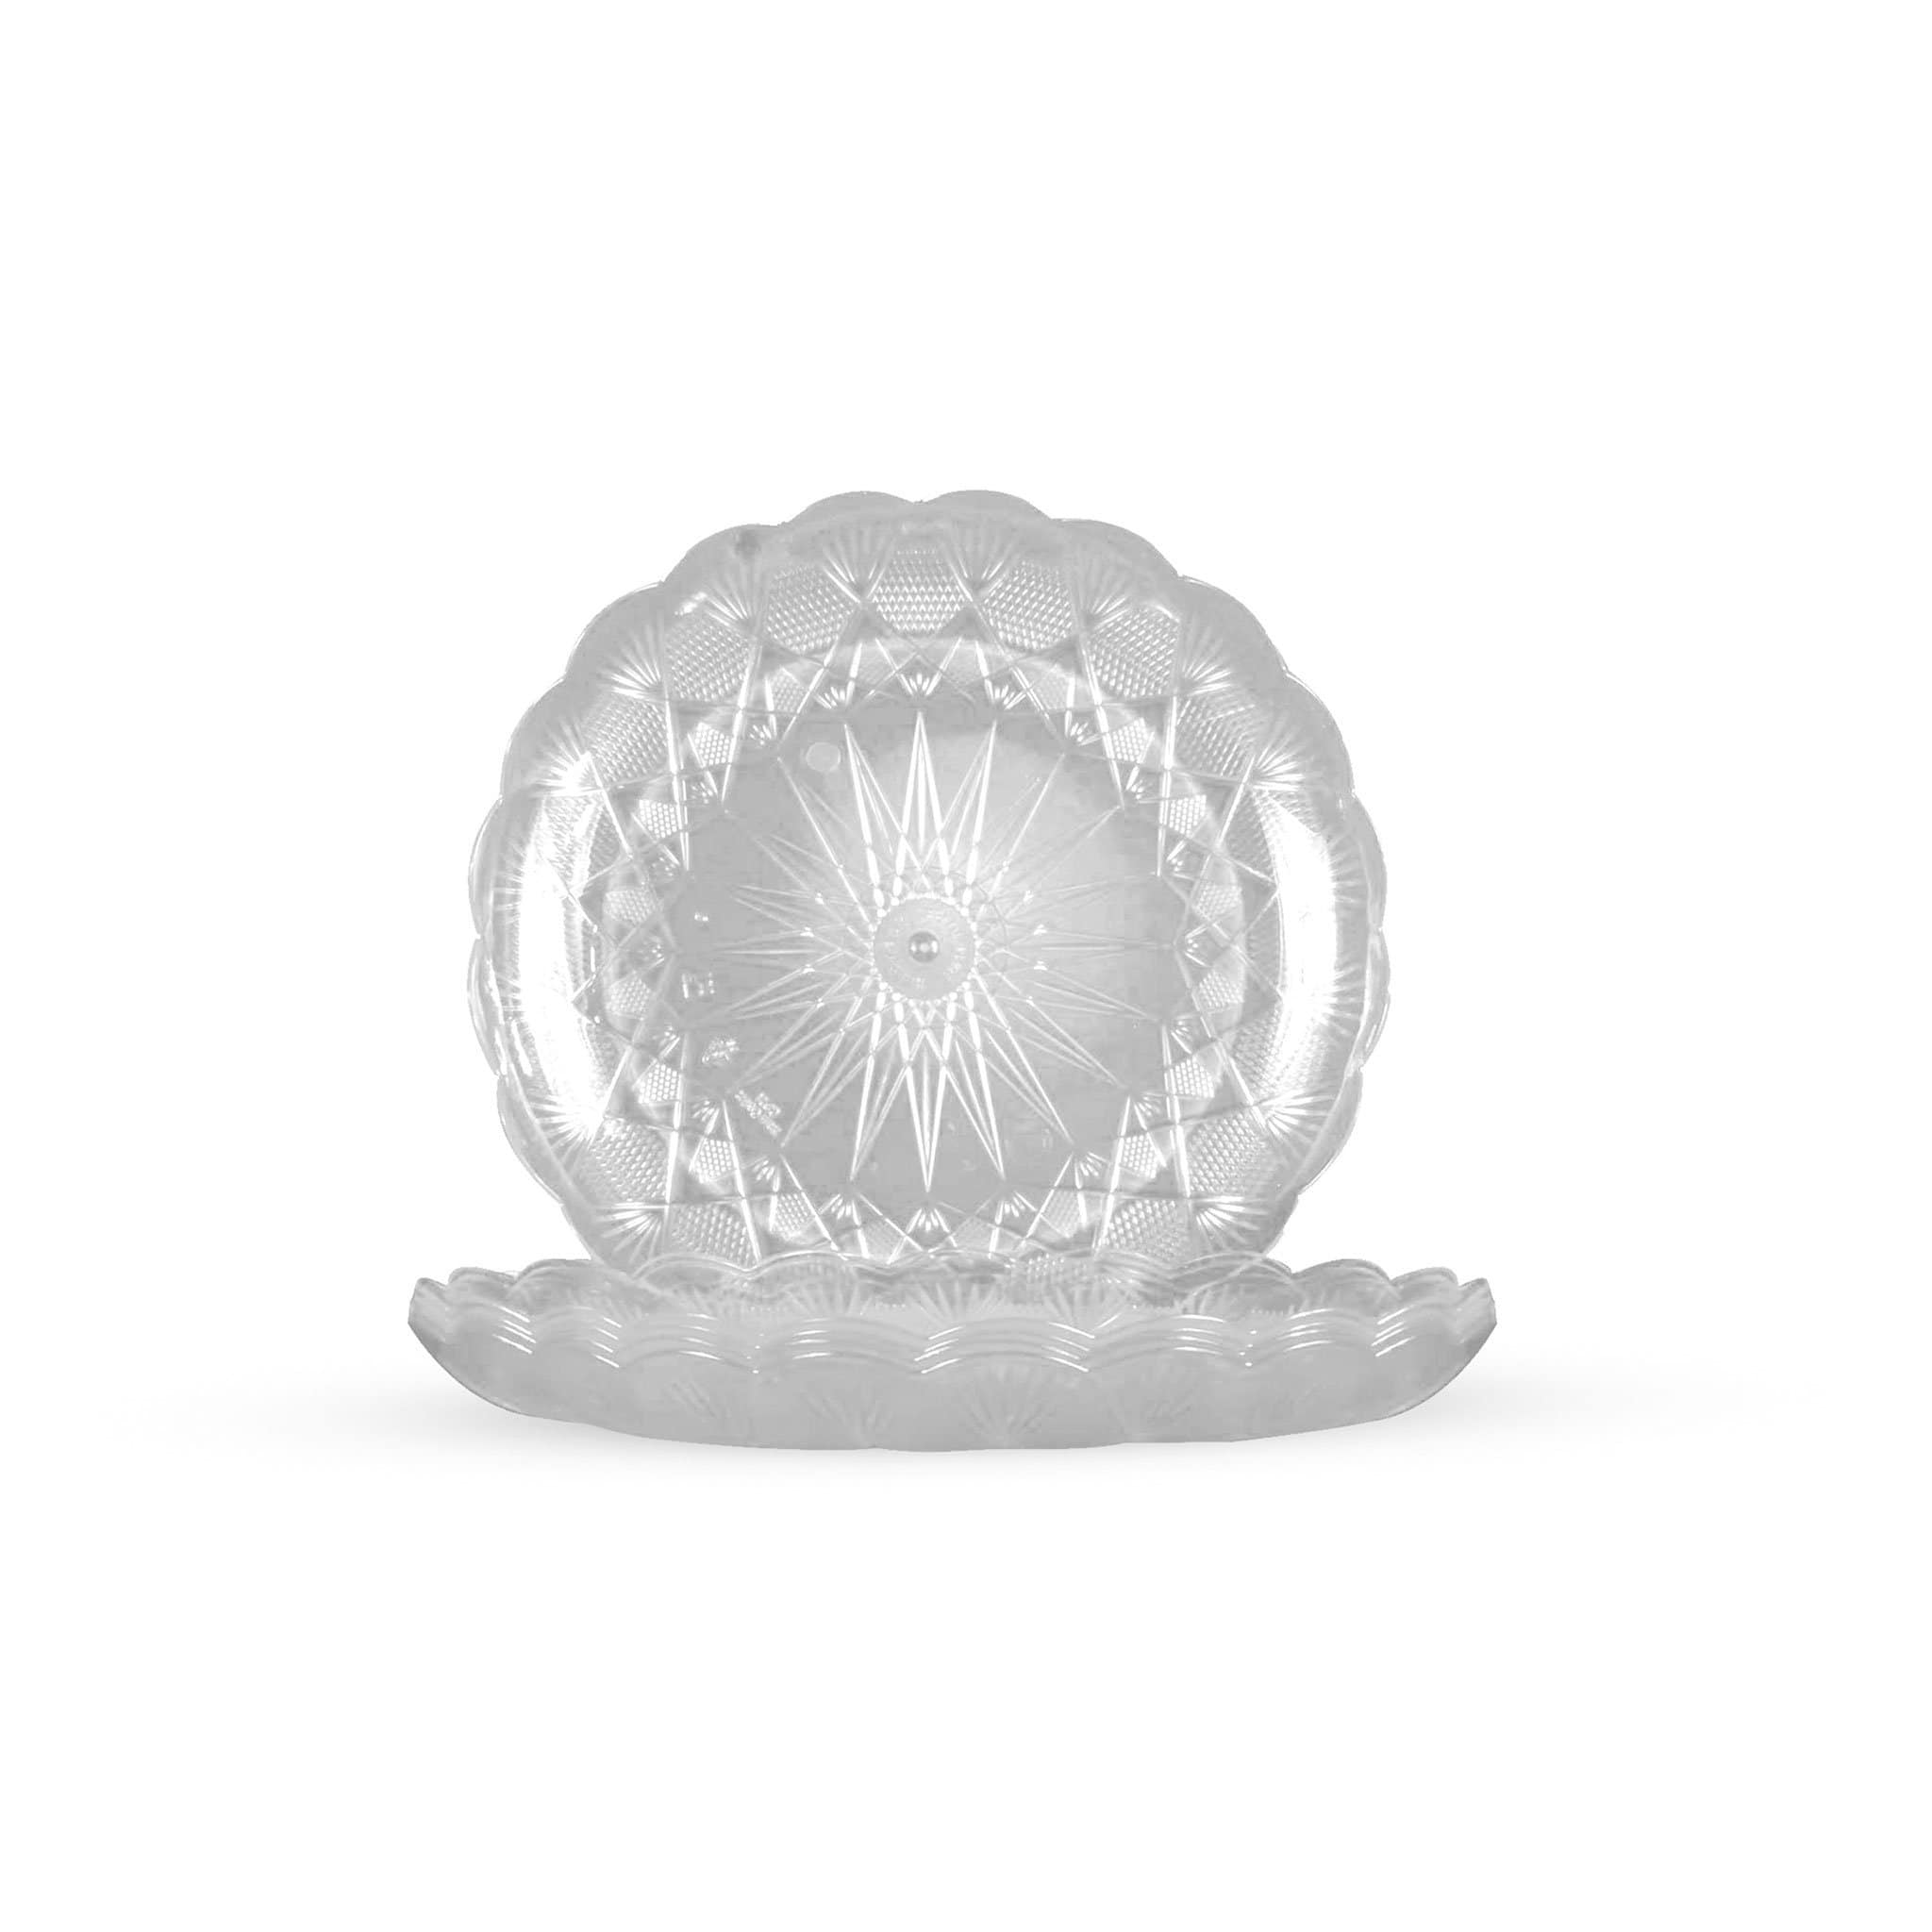 21 Cm Round Crystal Design Plate 